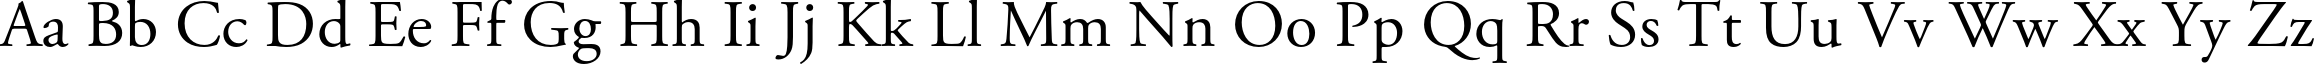 Пример написания английского алфавита шрифтом Adobe Garamond Pro